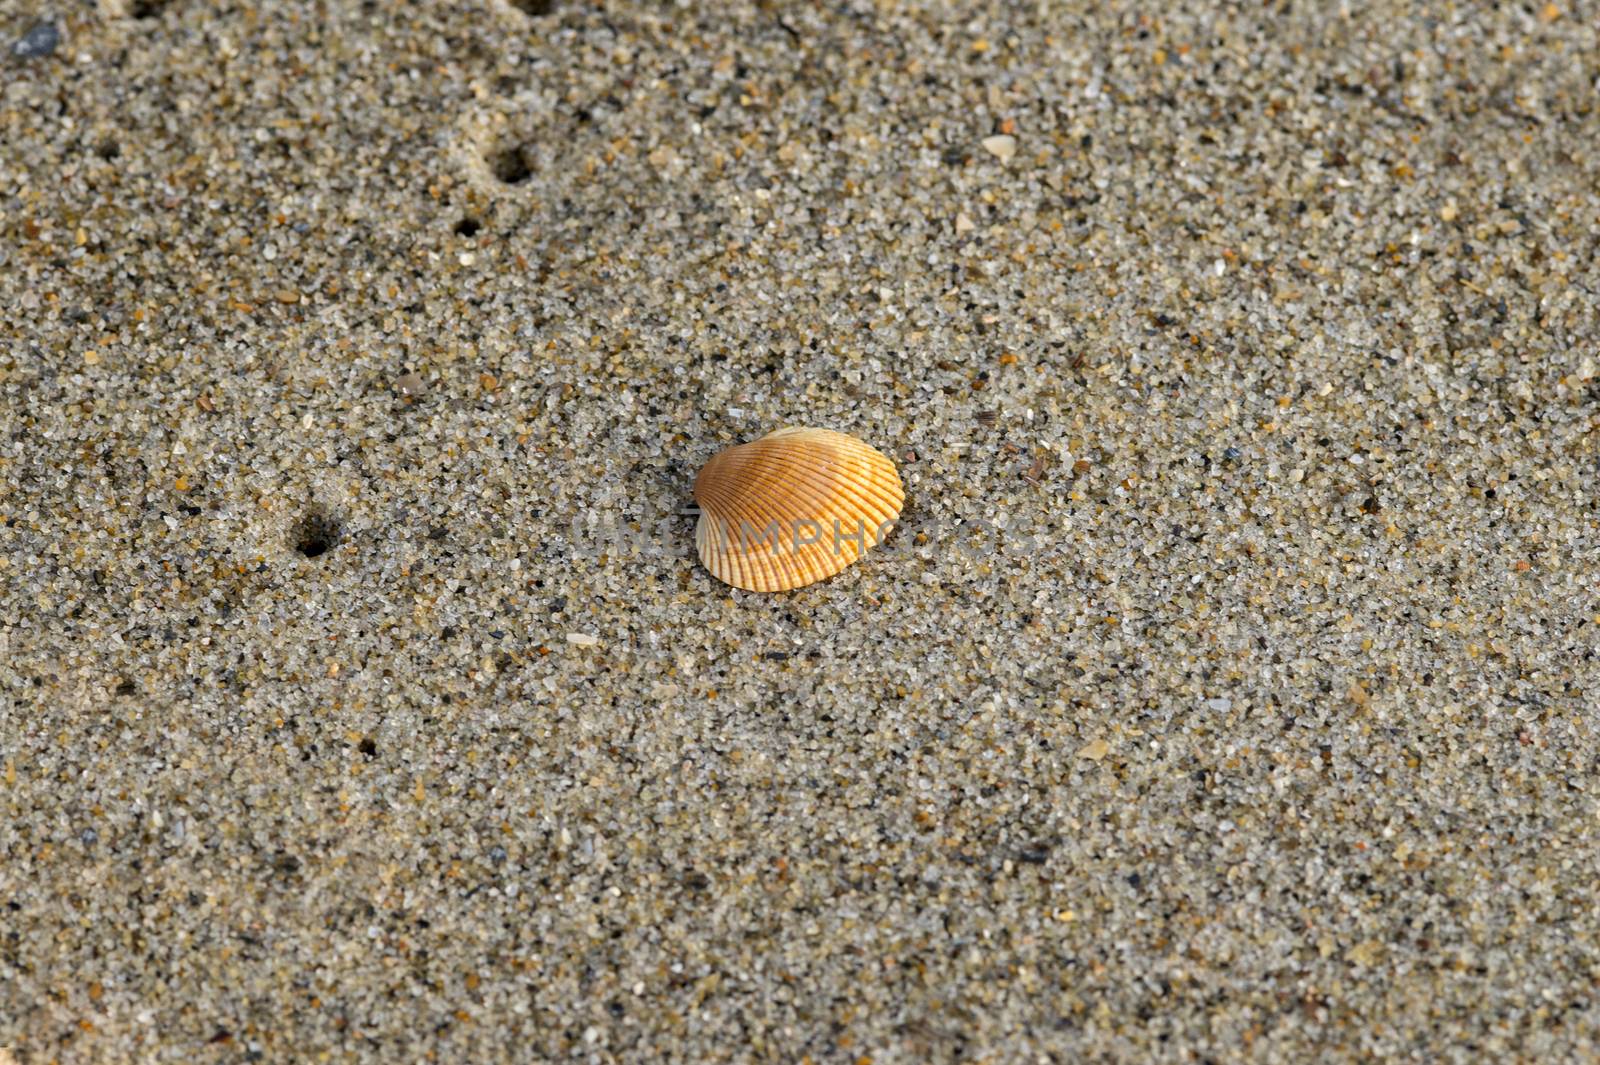 A beautiful shell on the beach sand